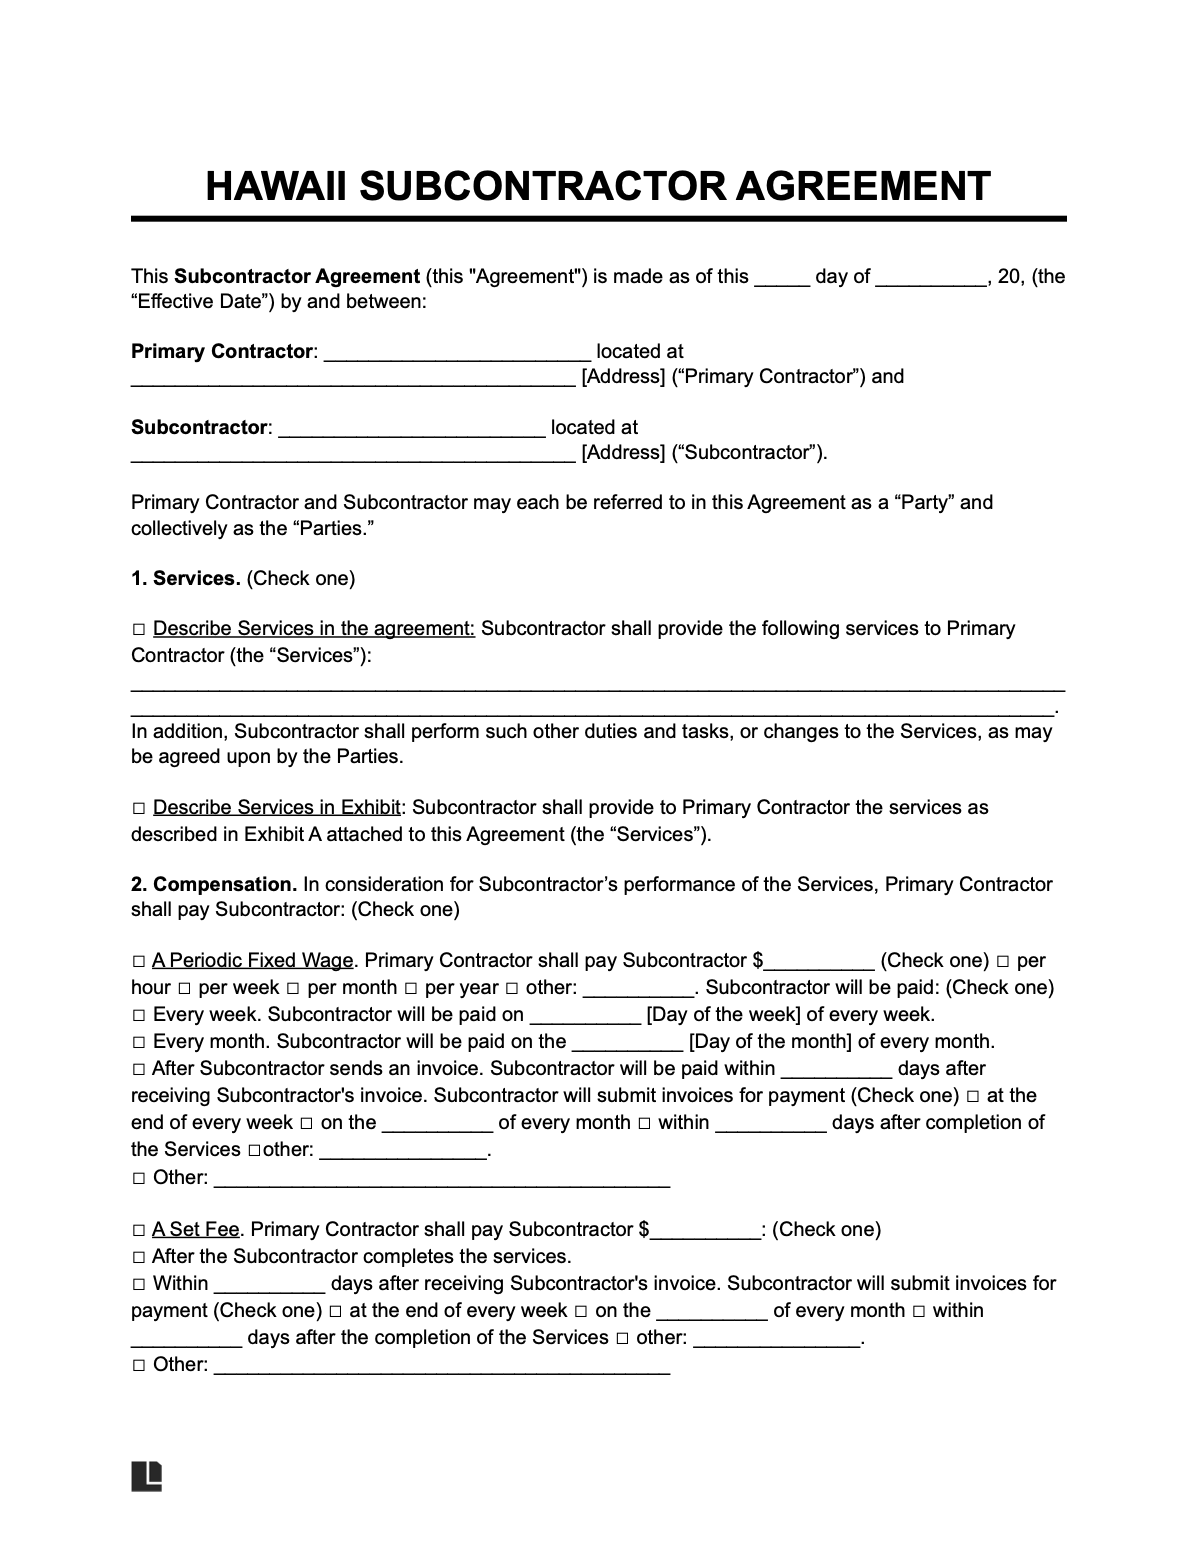 hawaii subcontractor agreement template